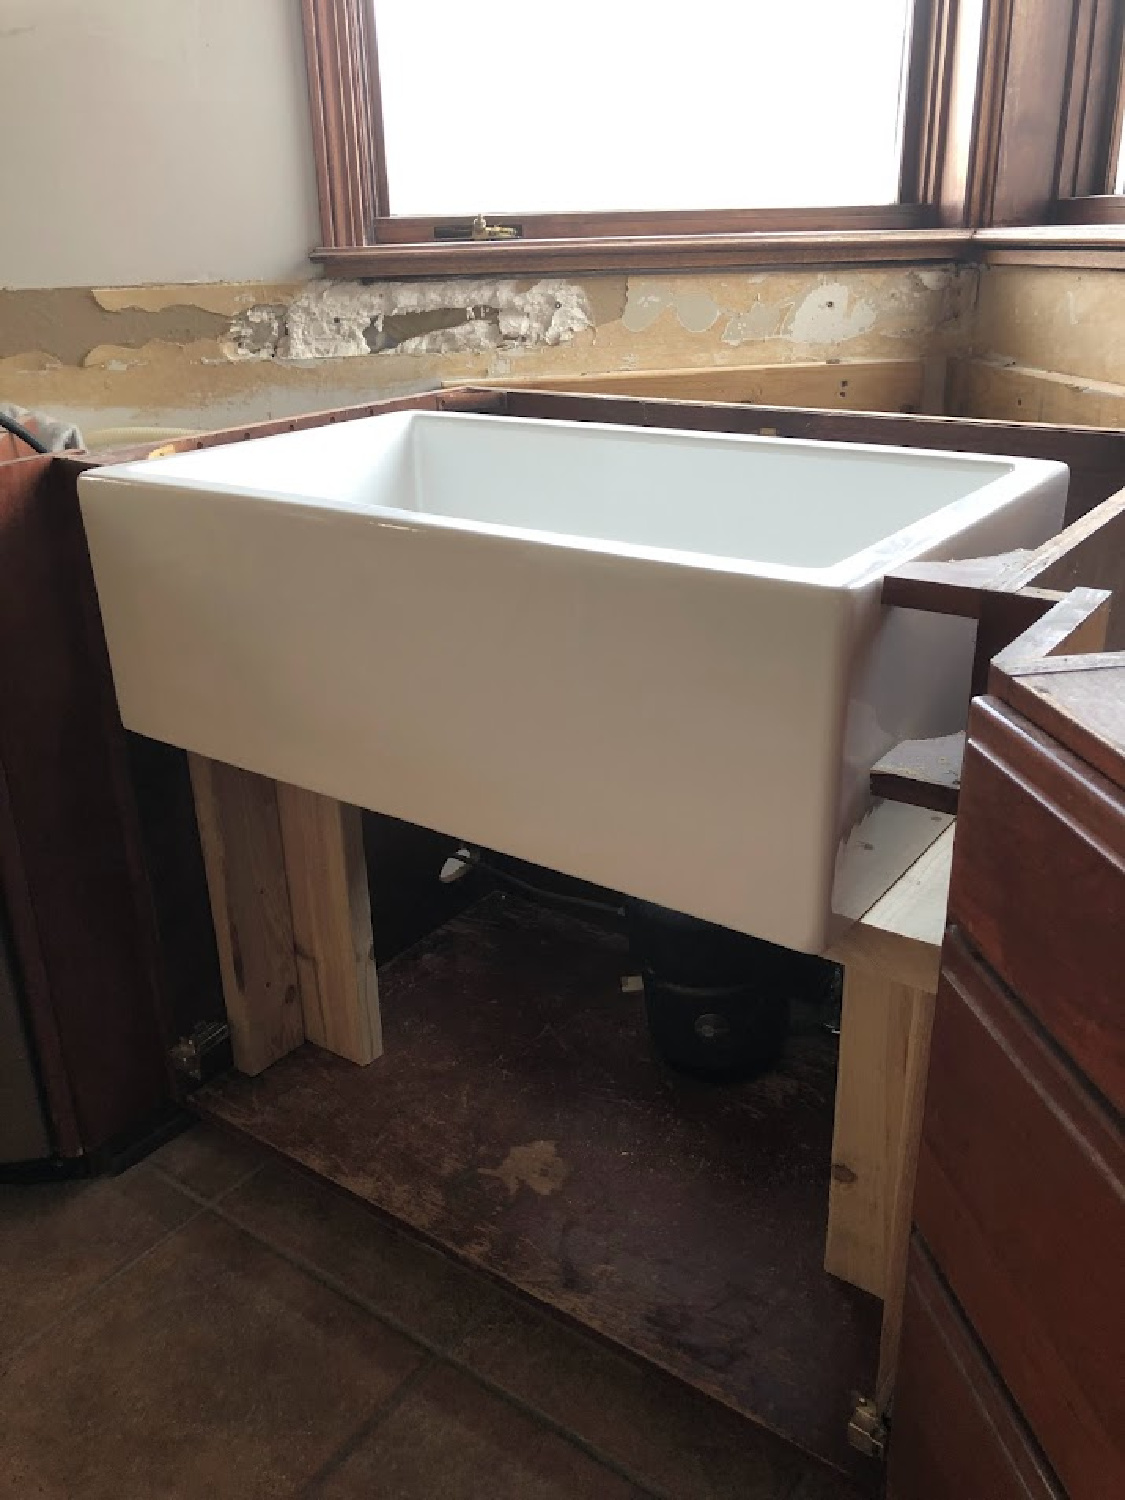 Nantucket Sinks farm sink in kitchen under construction - Hello Lovely Studio. #farmsinks #kitchenrenovation